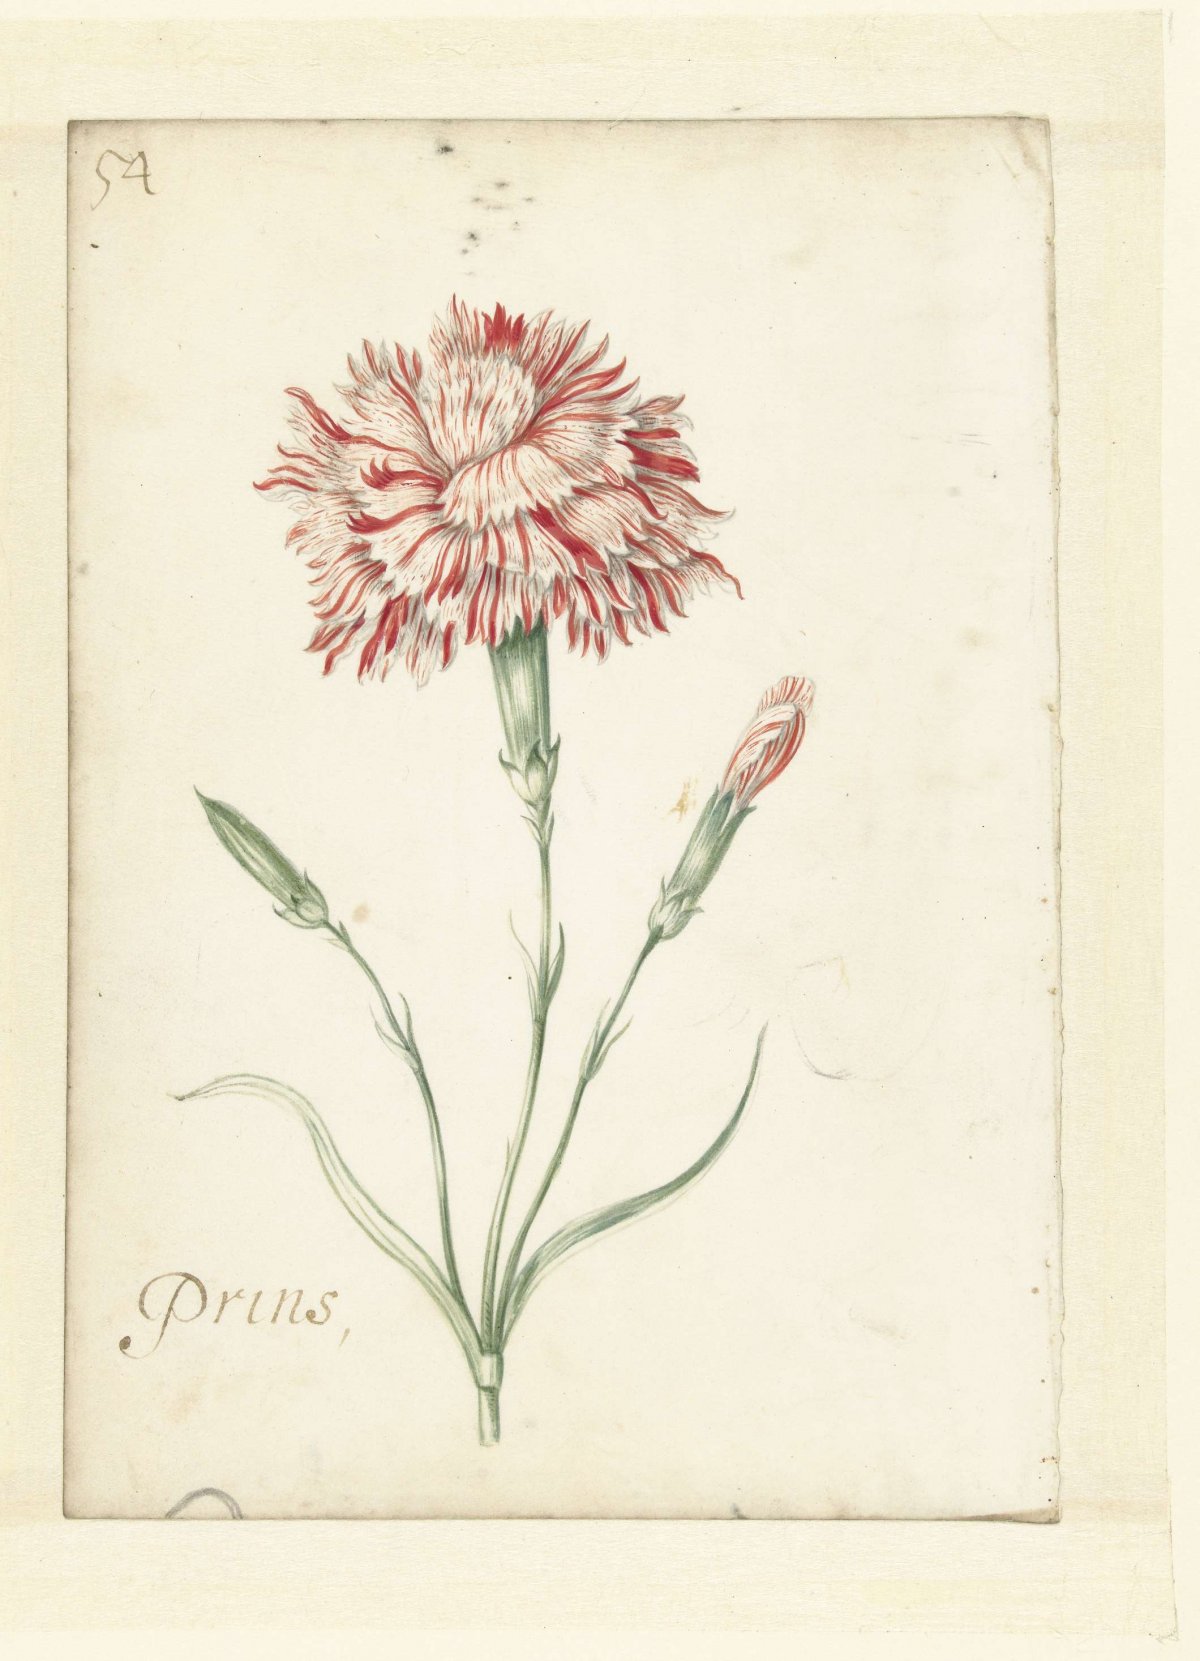 Carnation, Jacob Marrel, 1624 - 1681